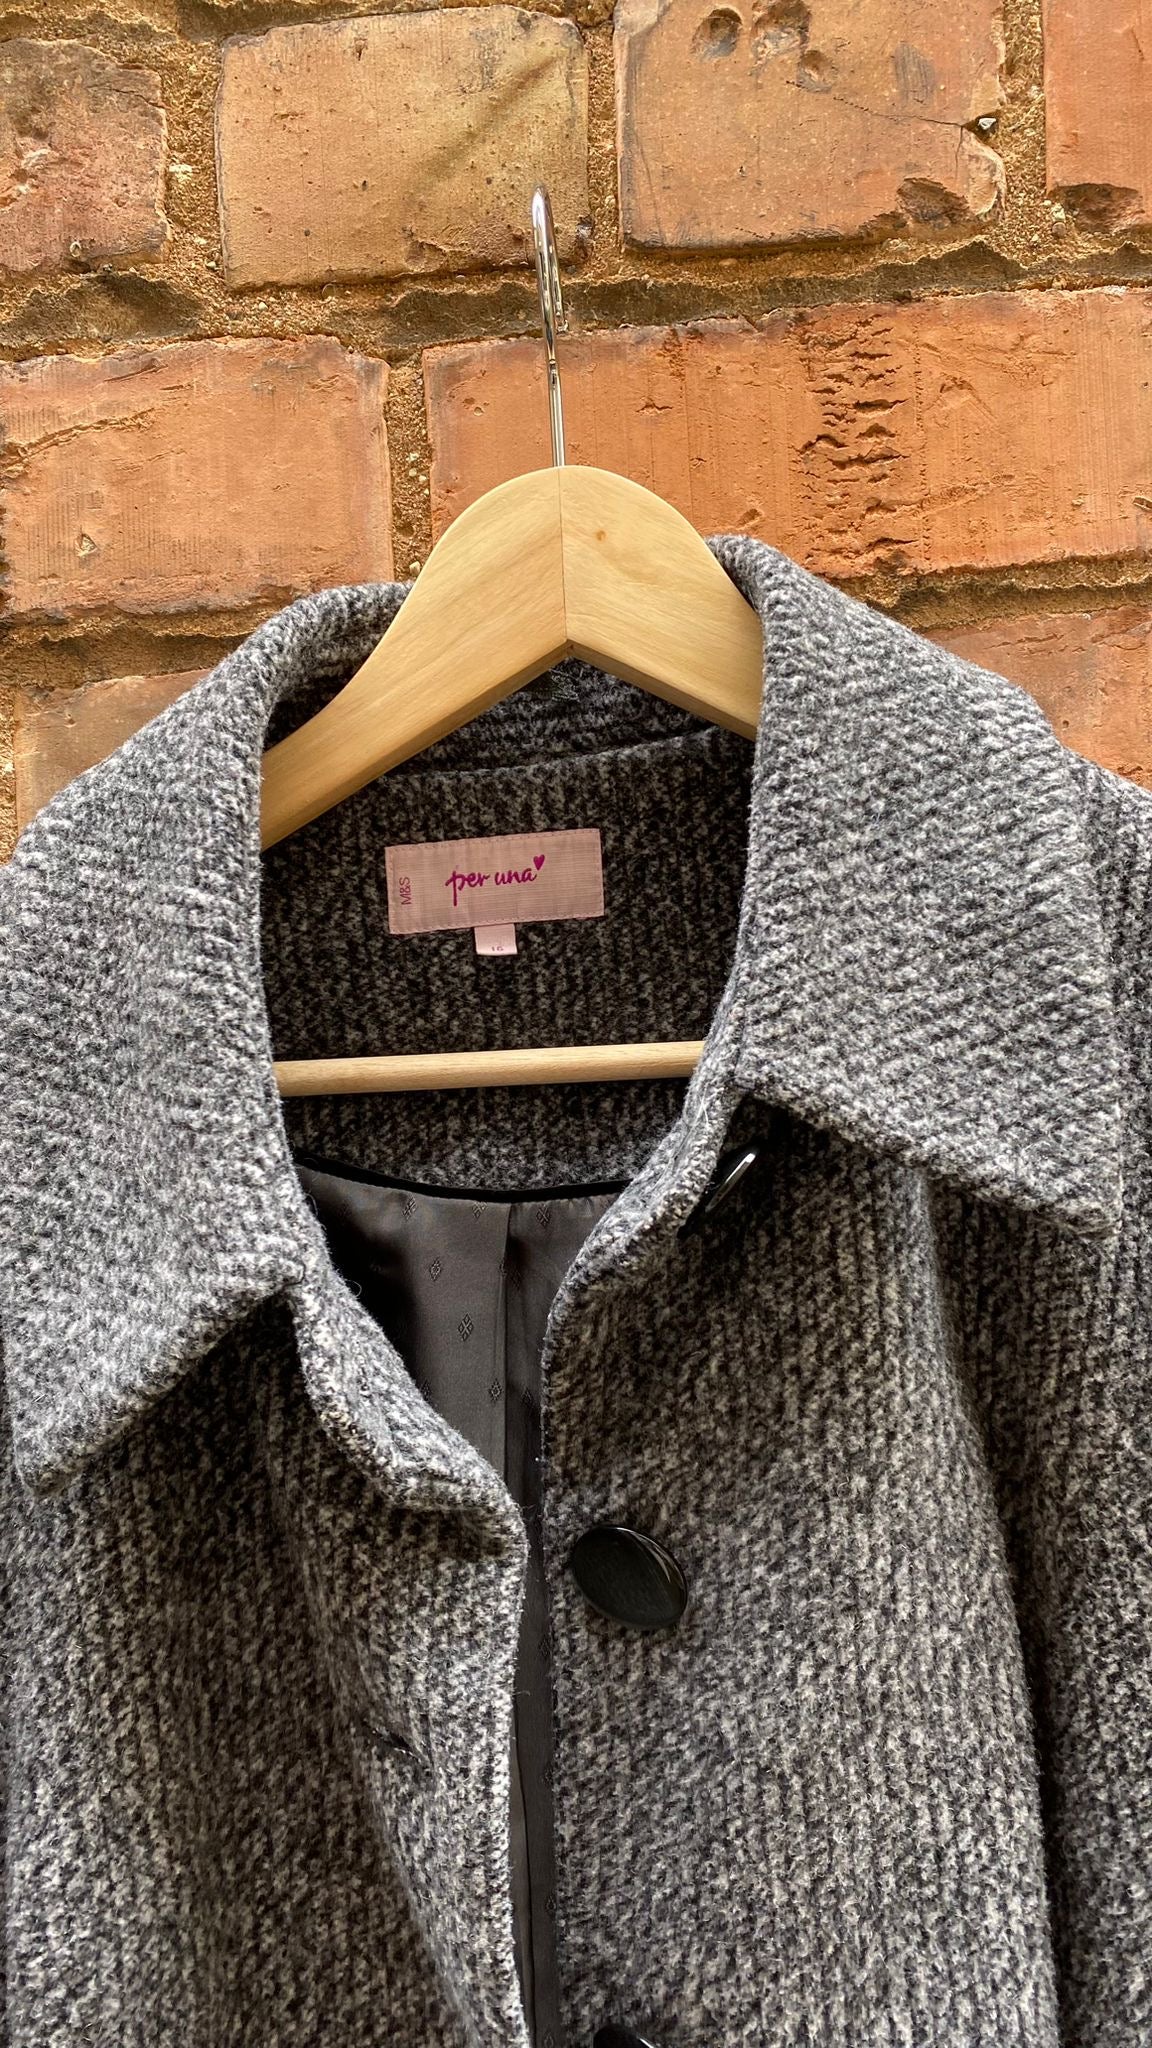 M&S Wool blend Grey Coat 16